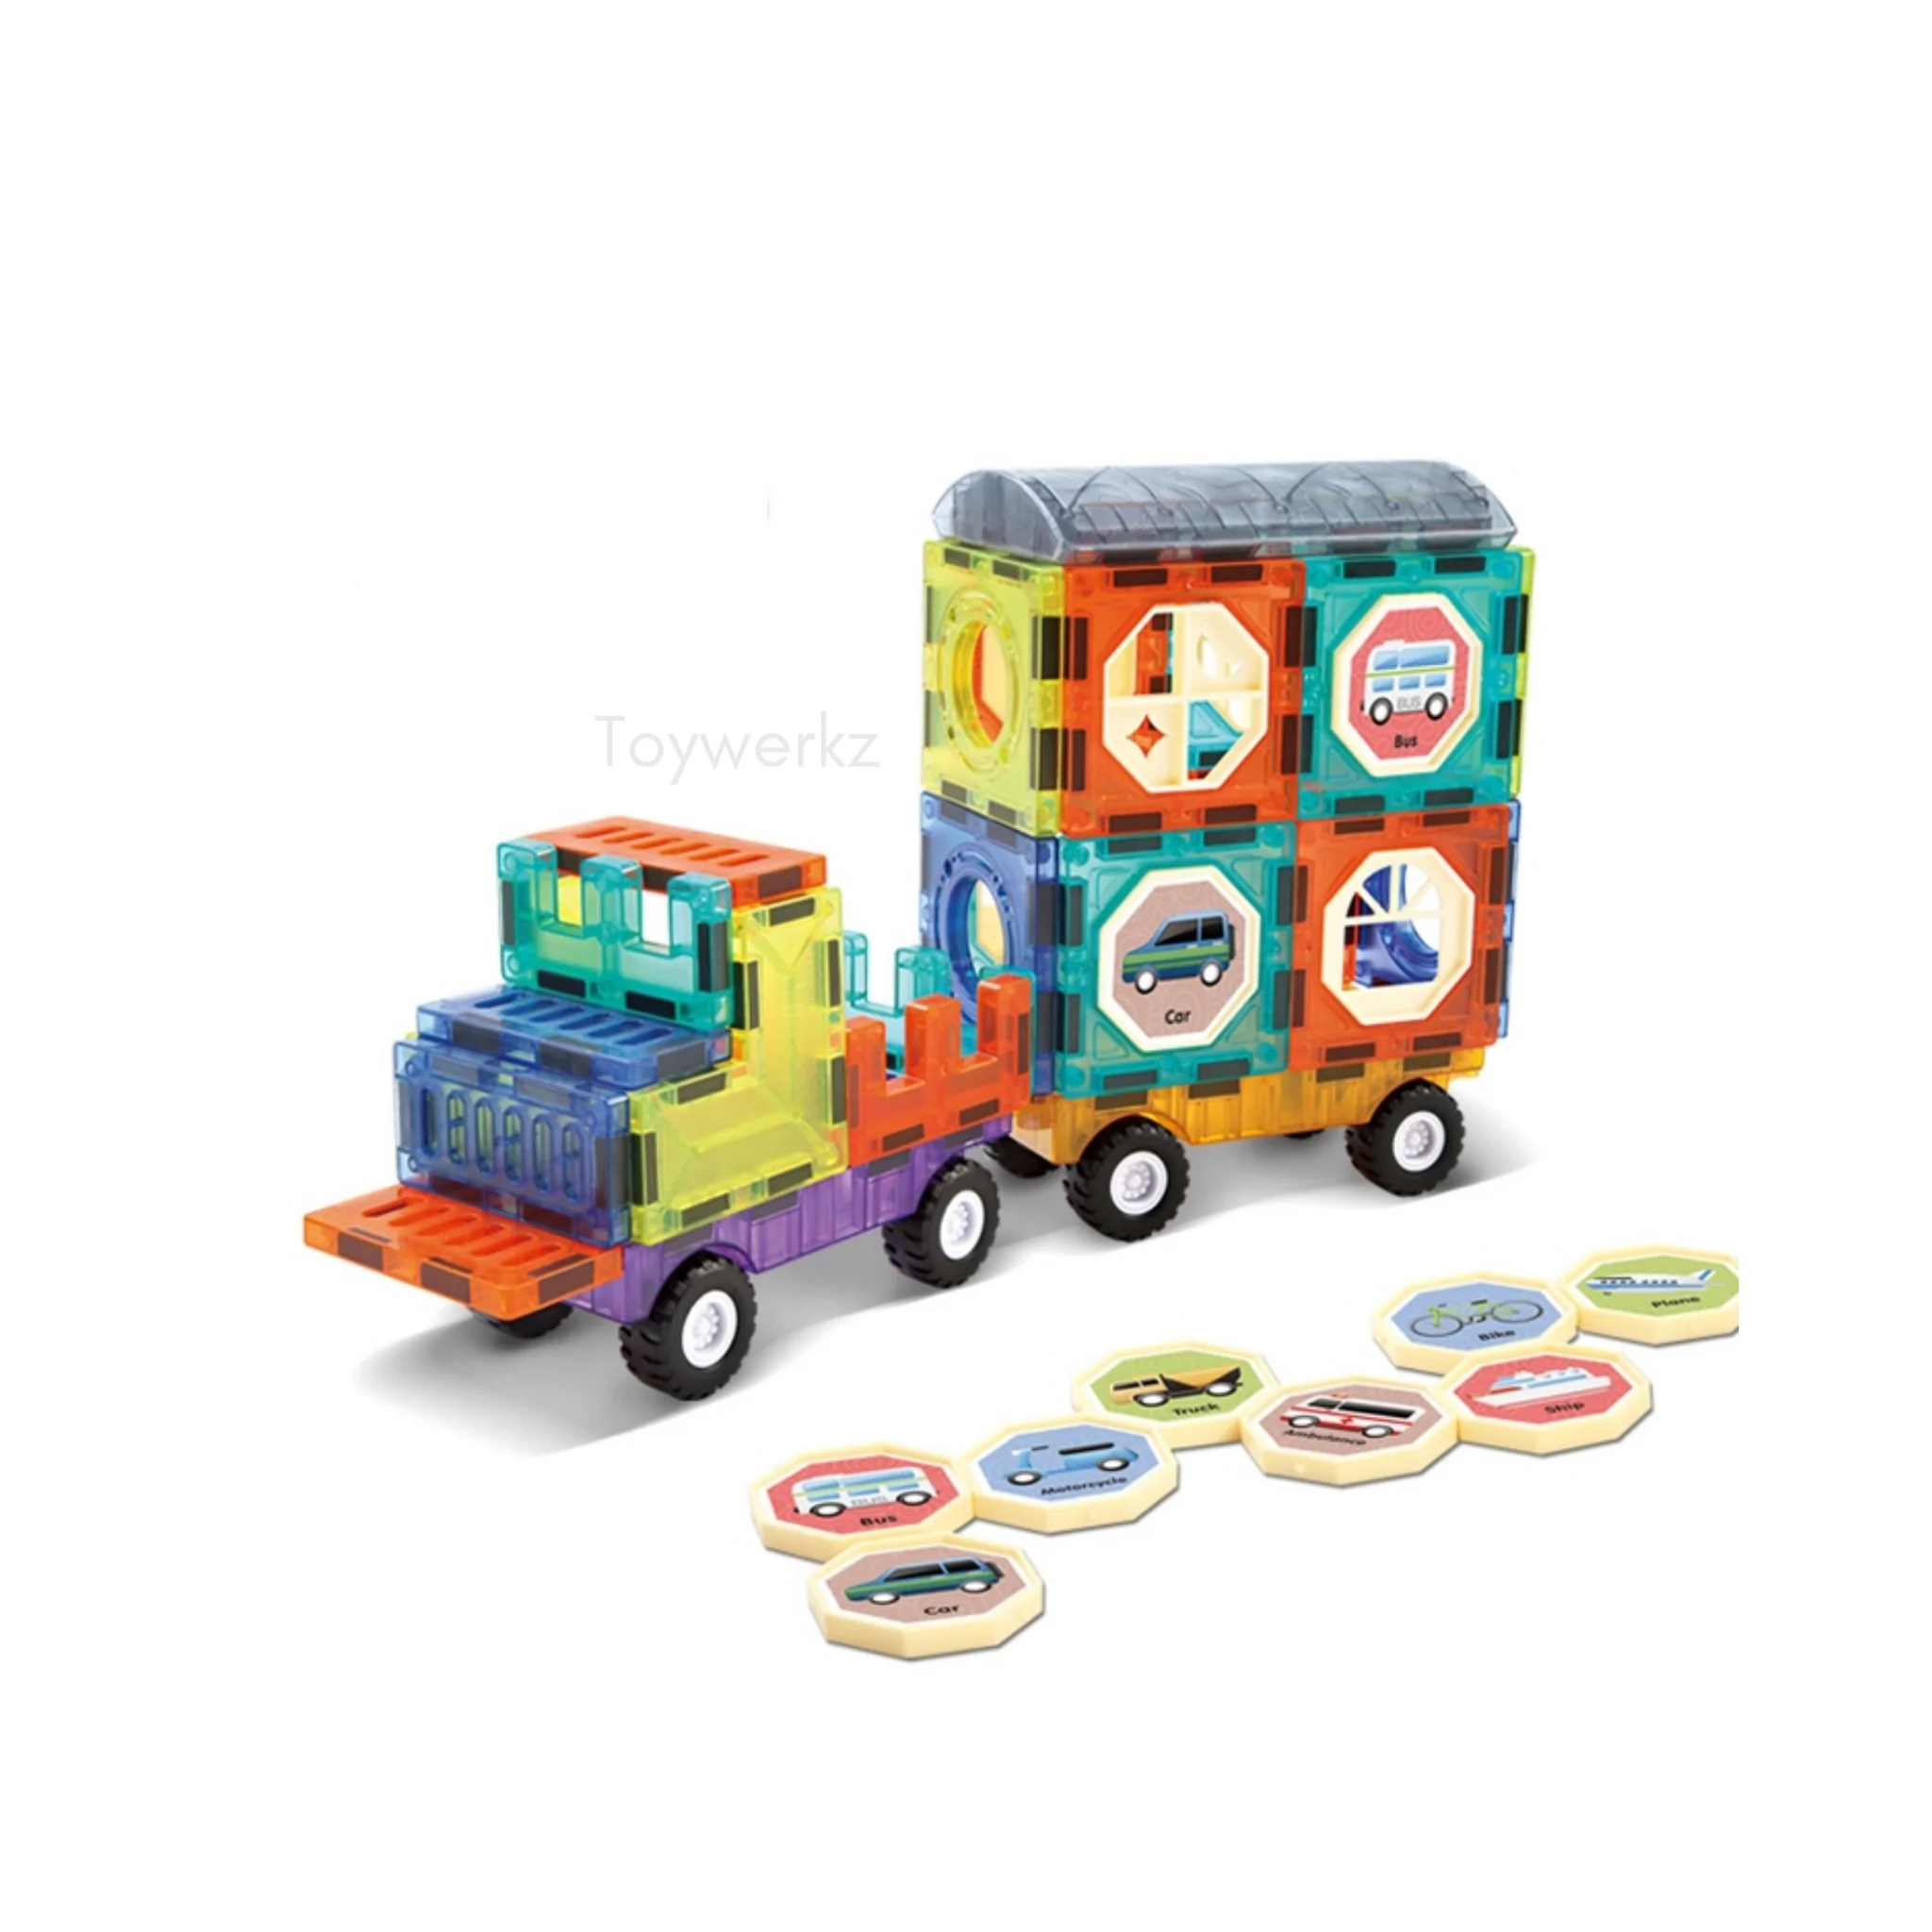 Toywerkz Magic Magnetic Blocks - Truck